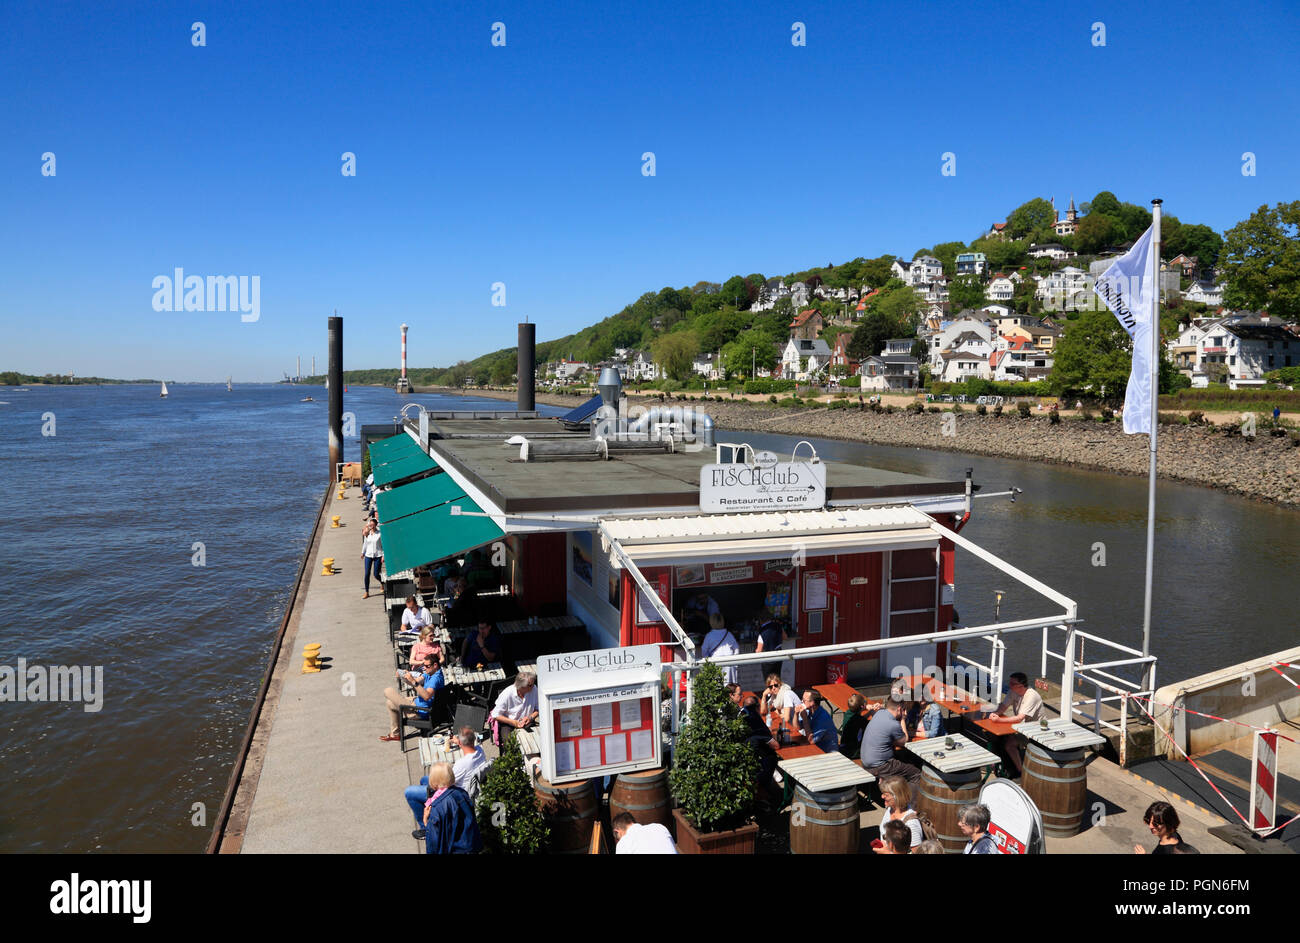 Restaurant FISCHCLUB on pier Blankenese, Hamburg, Germany, Europe Stock Photo